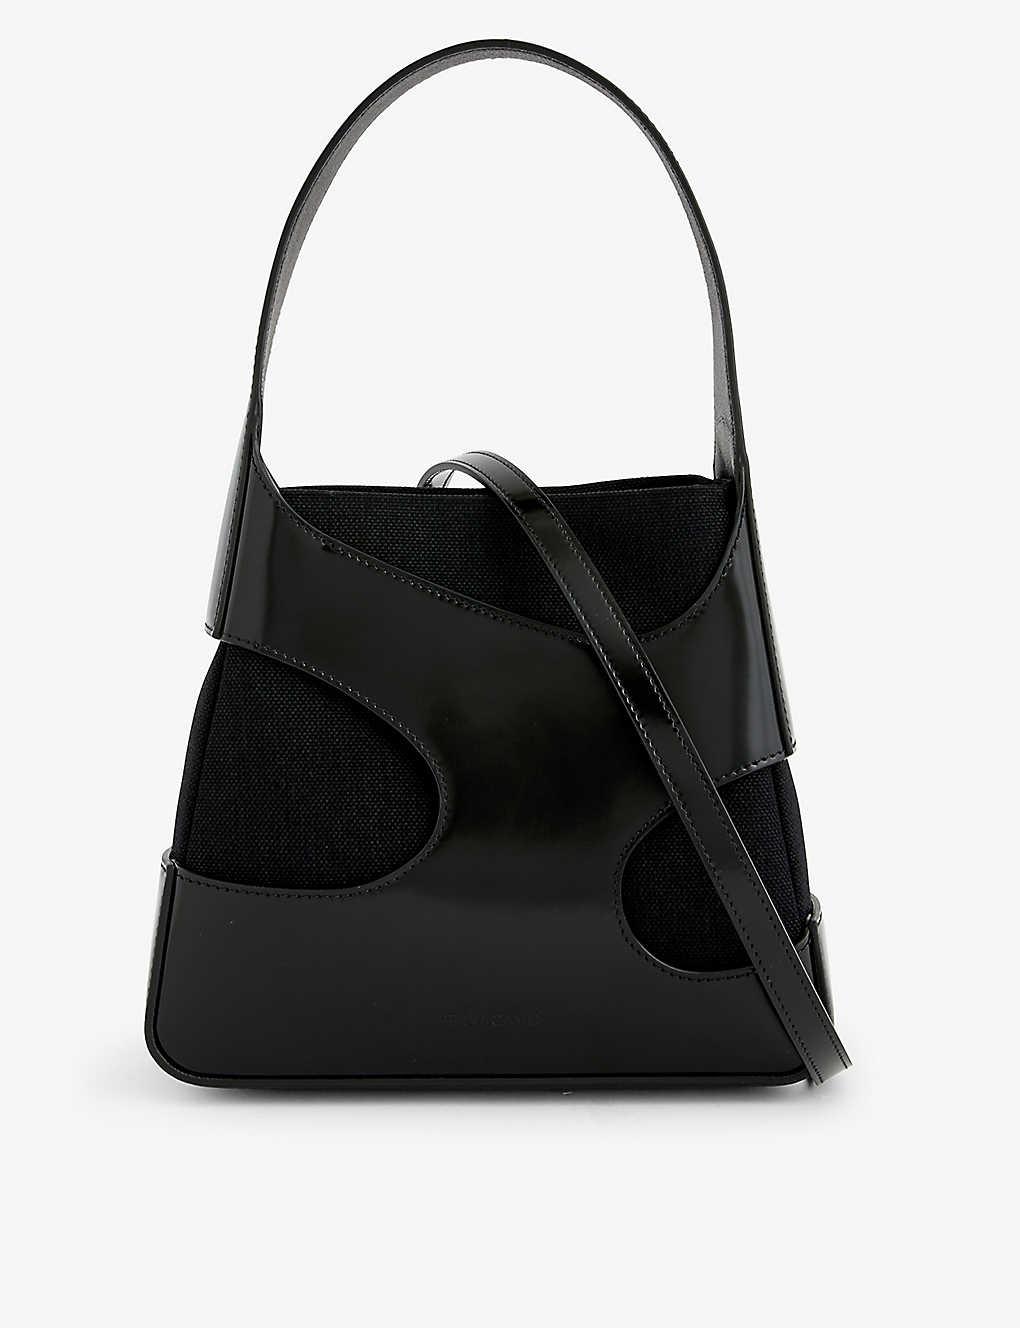 Ferragamo Cut-out Small Leather Shoulder Bag in Black | Lyst